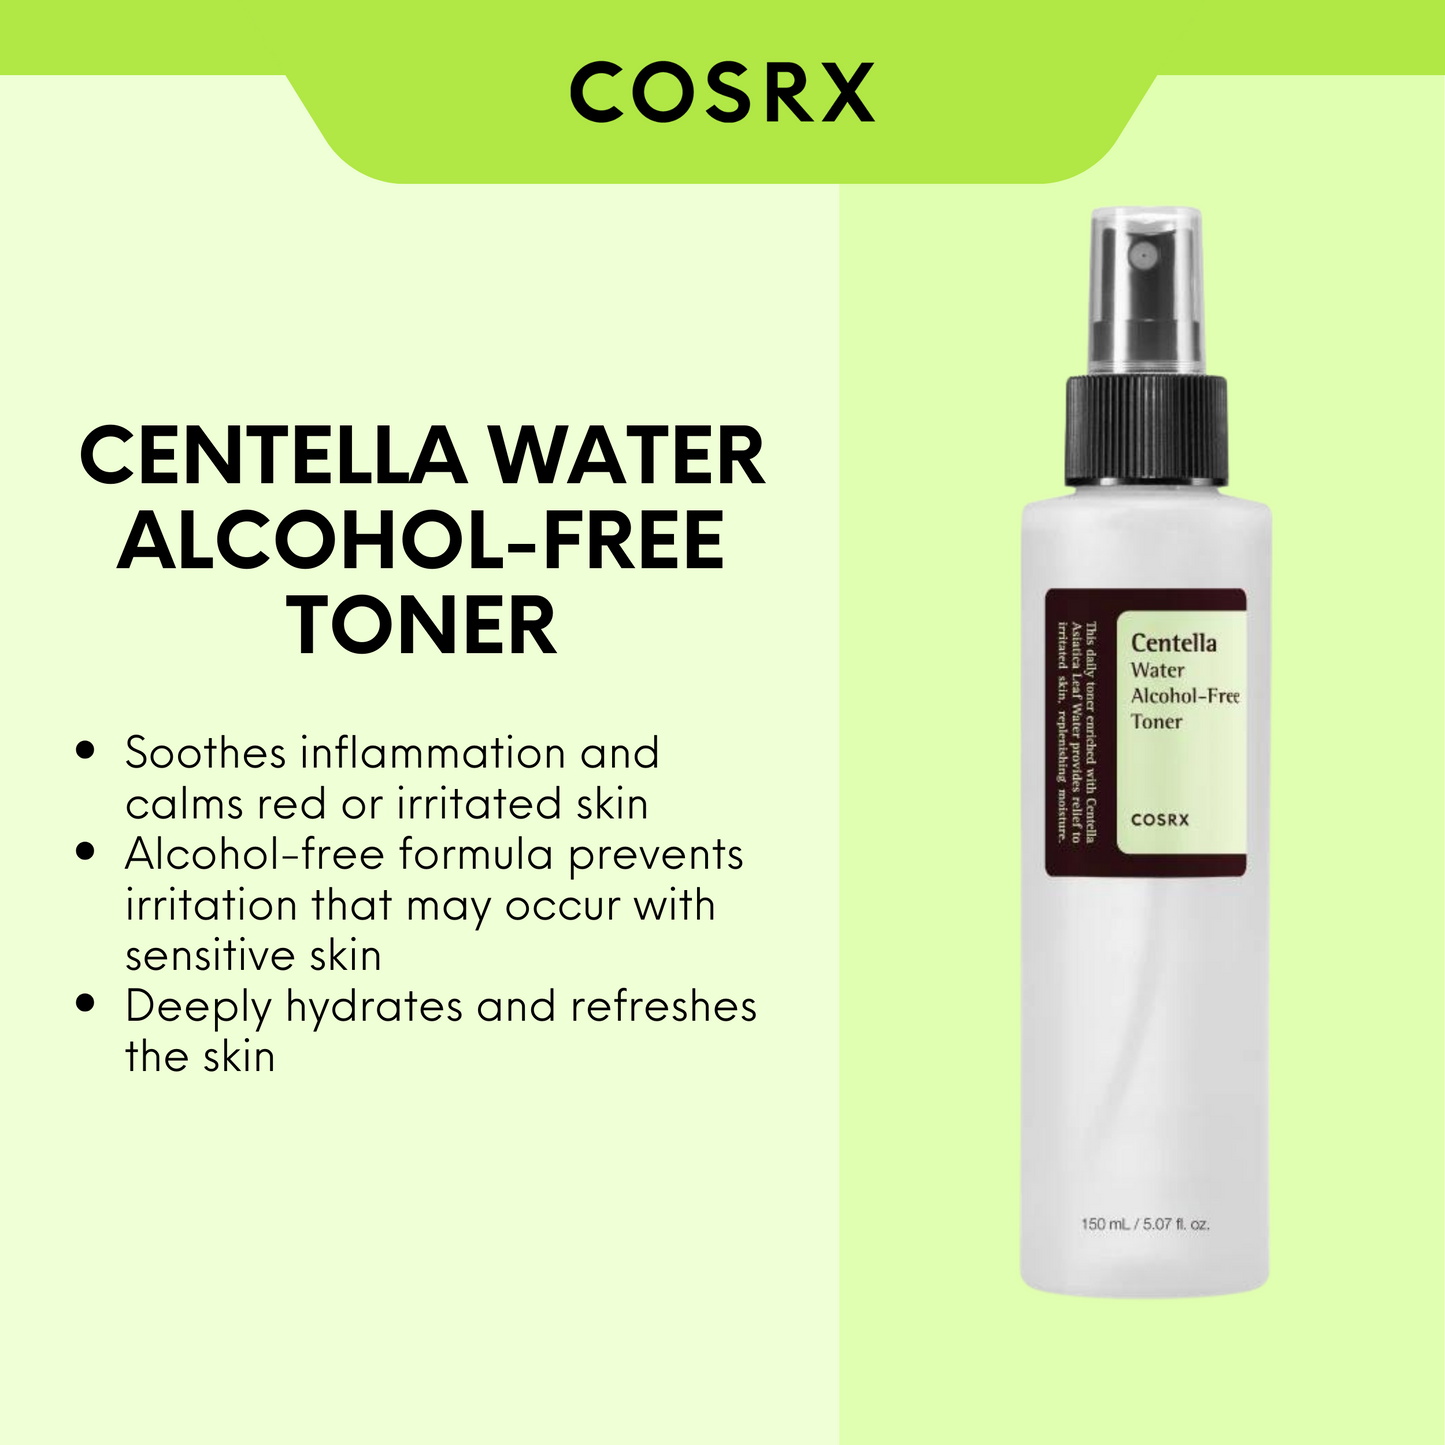 COSRX, Centella Water Alcohol-Free Toner 150ml All About Skin Doha Skincare Qatar Beauty Cosmetics Available in Qatar Available in Qatar Store all about skin doha qatar skincare cosmetics beauty